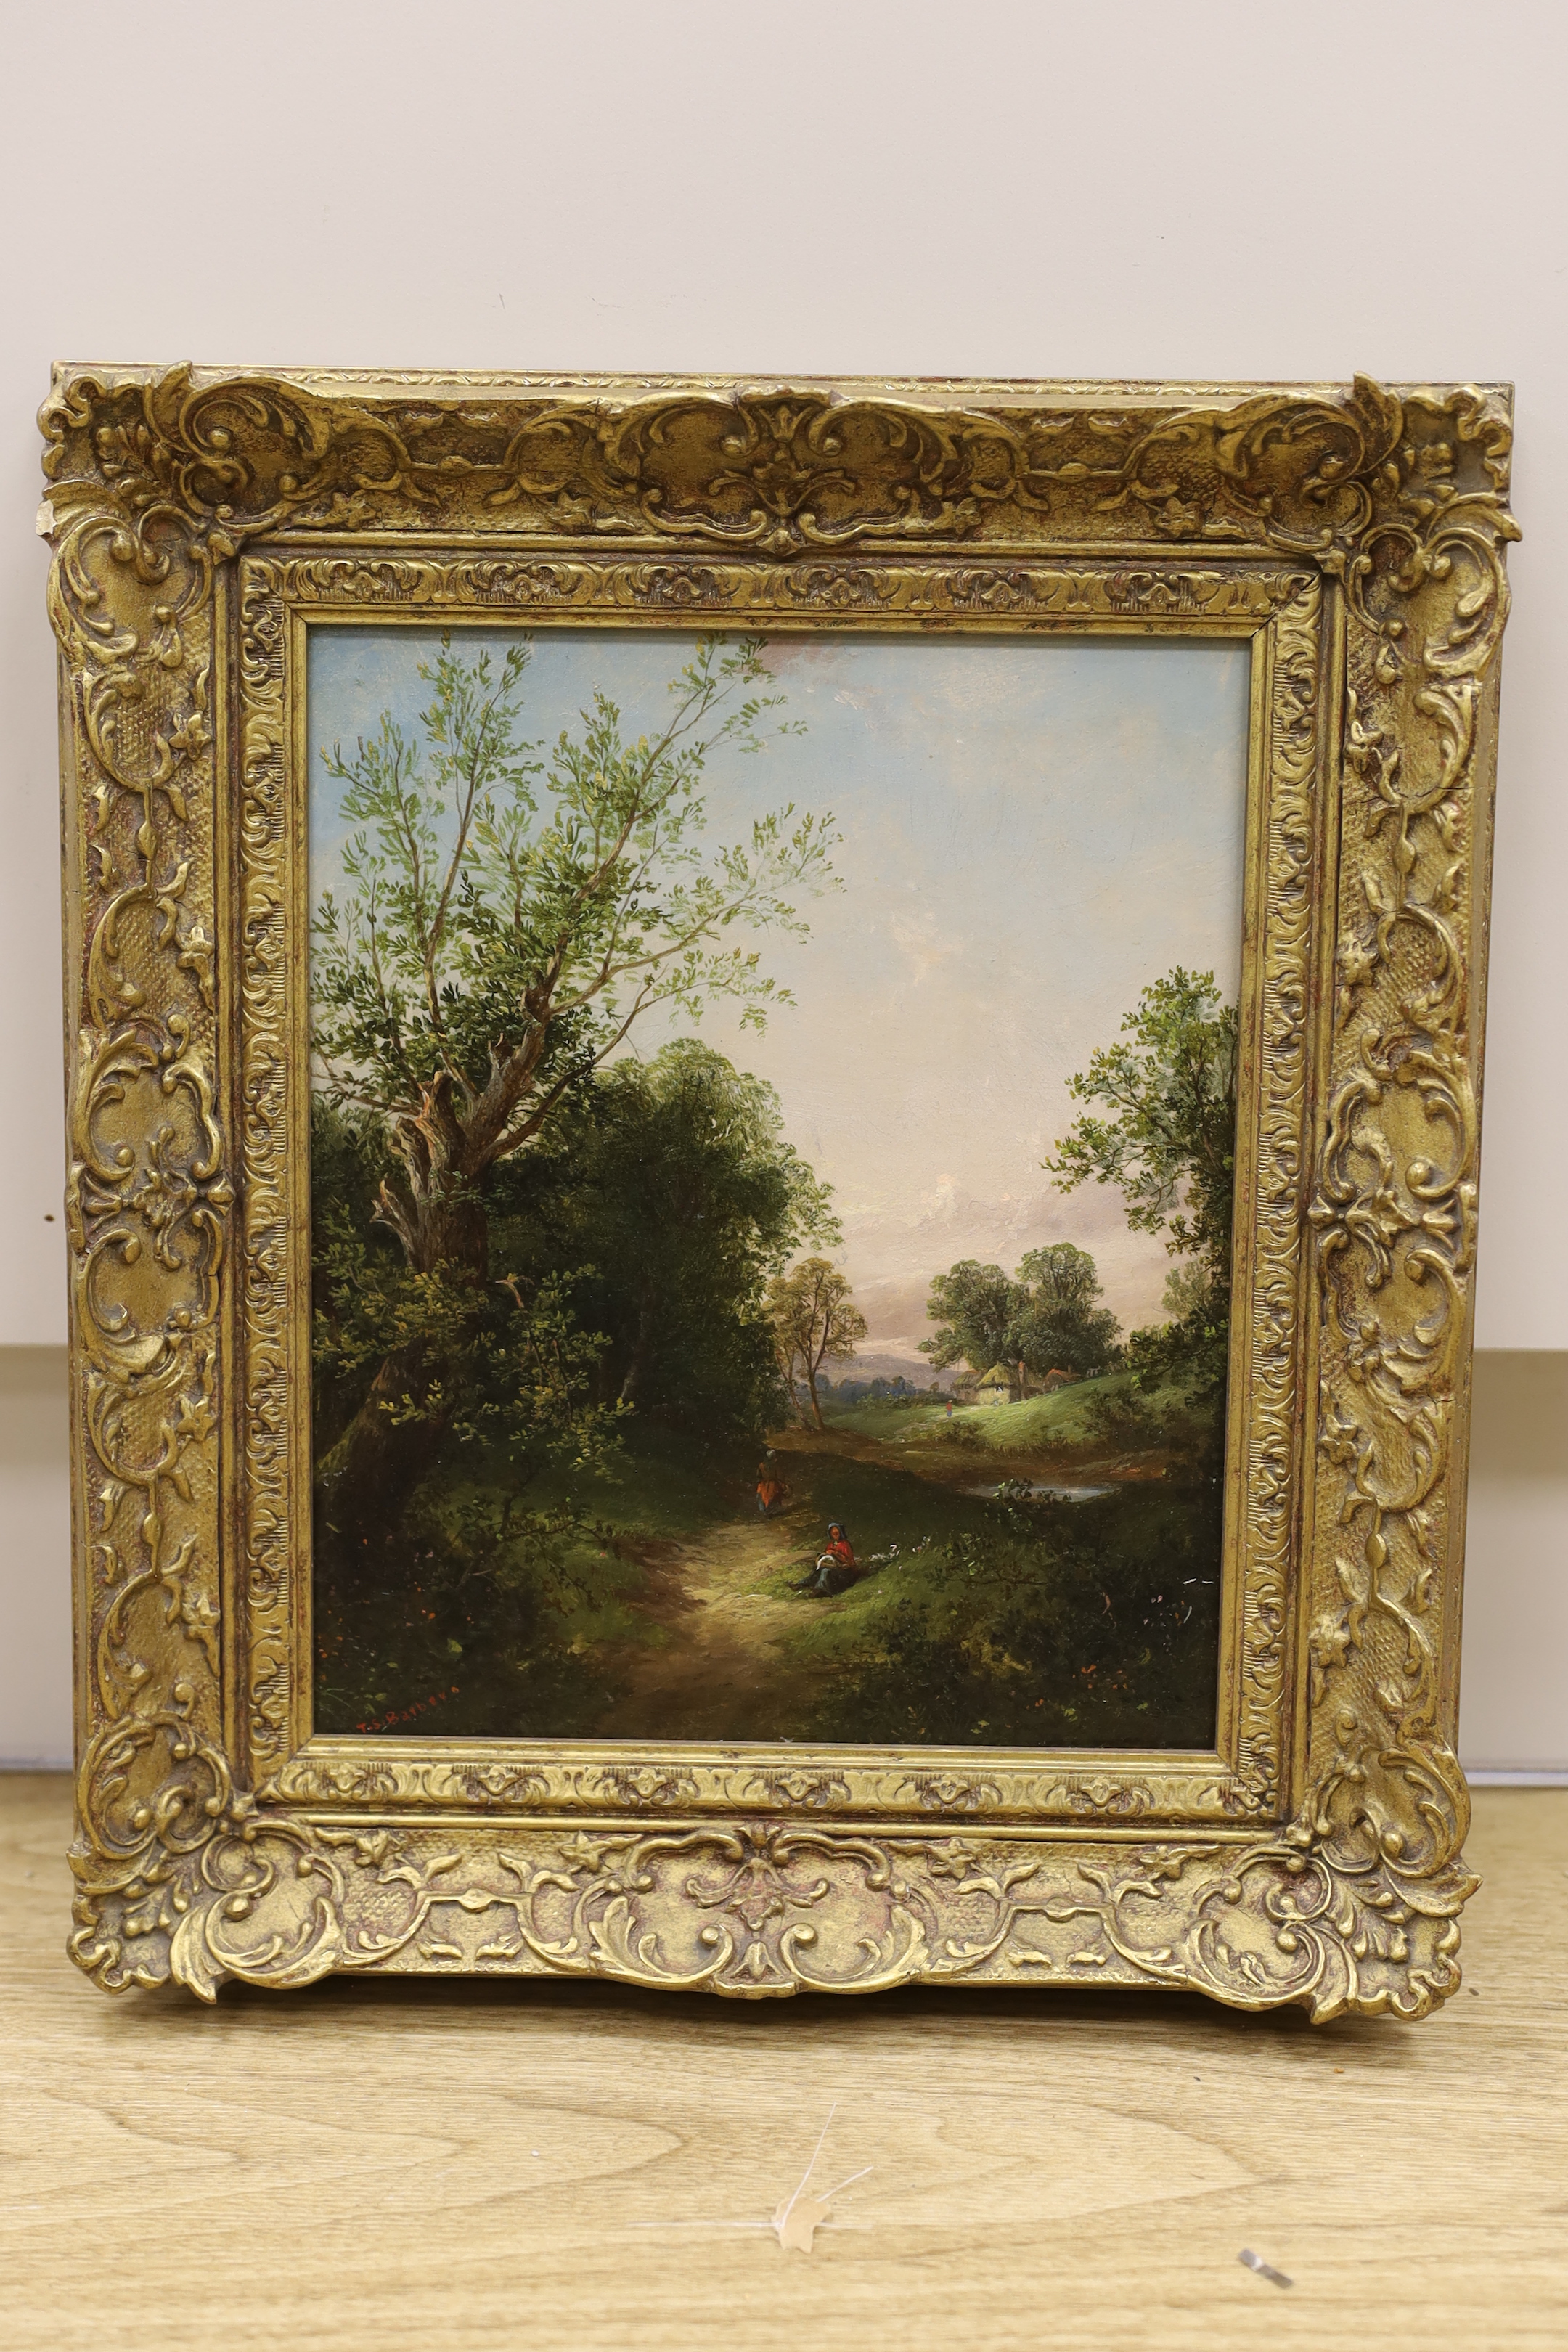 Thomas Stanley Barber (fl.1891-1899), oil on canvas, Rural landscape with figures, signed, inscribed in ink verso, 29 x 23cm, ornate gilt frame